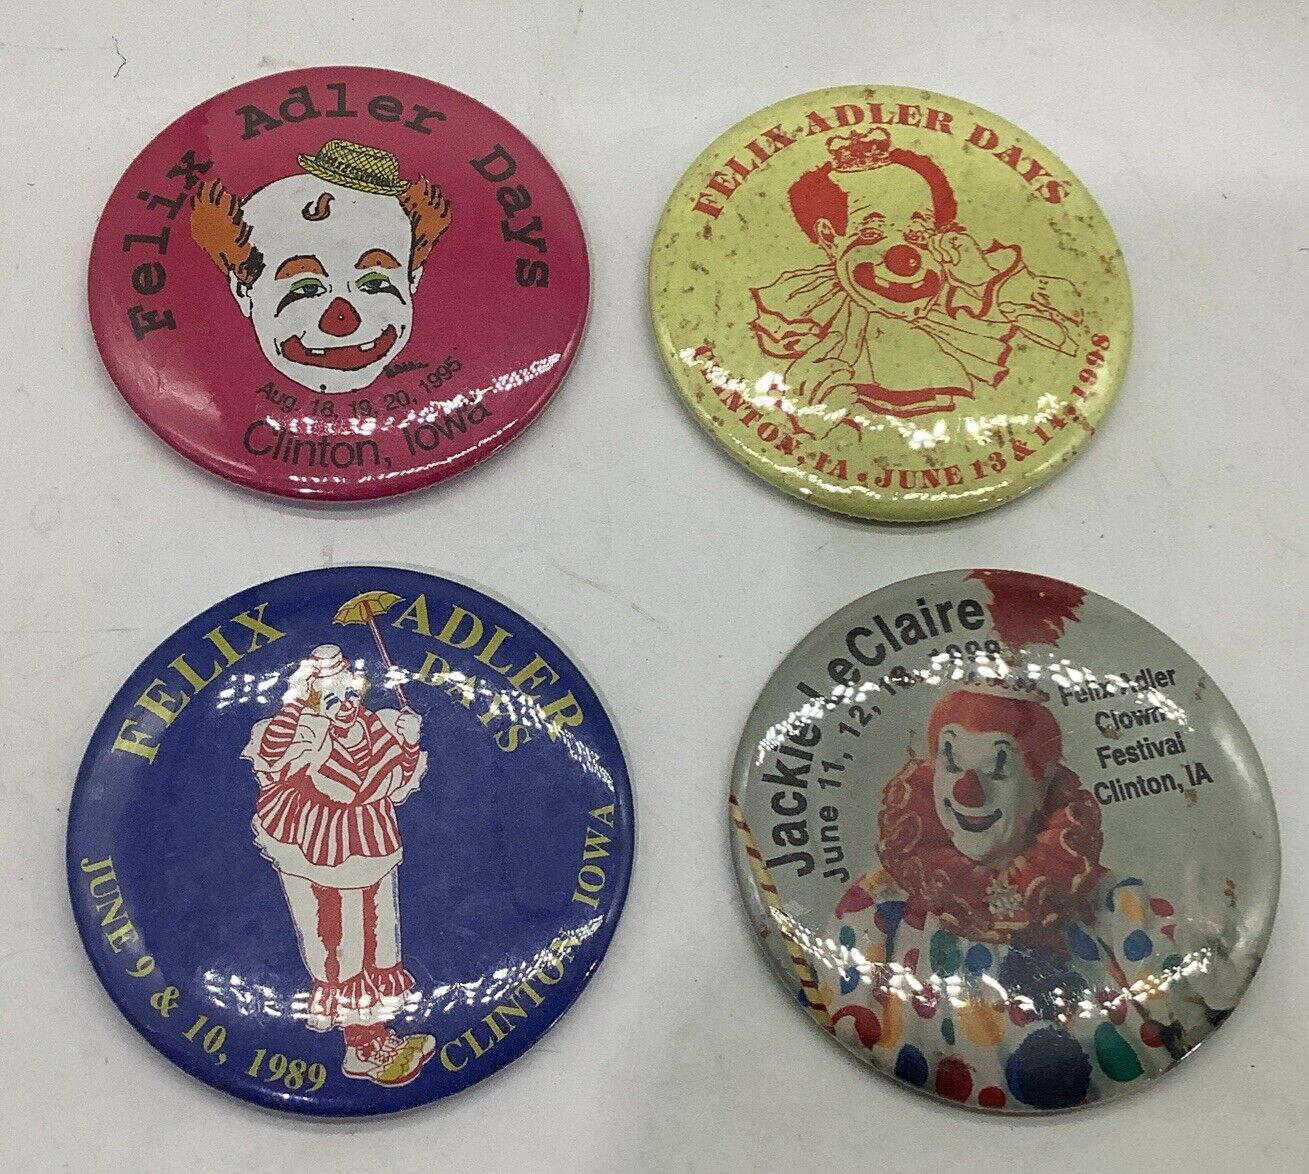 Felix Adler Clown Festival Buttons Pins 1989 -95 -98 -99 Clinton Iowa 3” Pinback